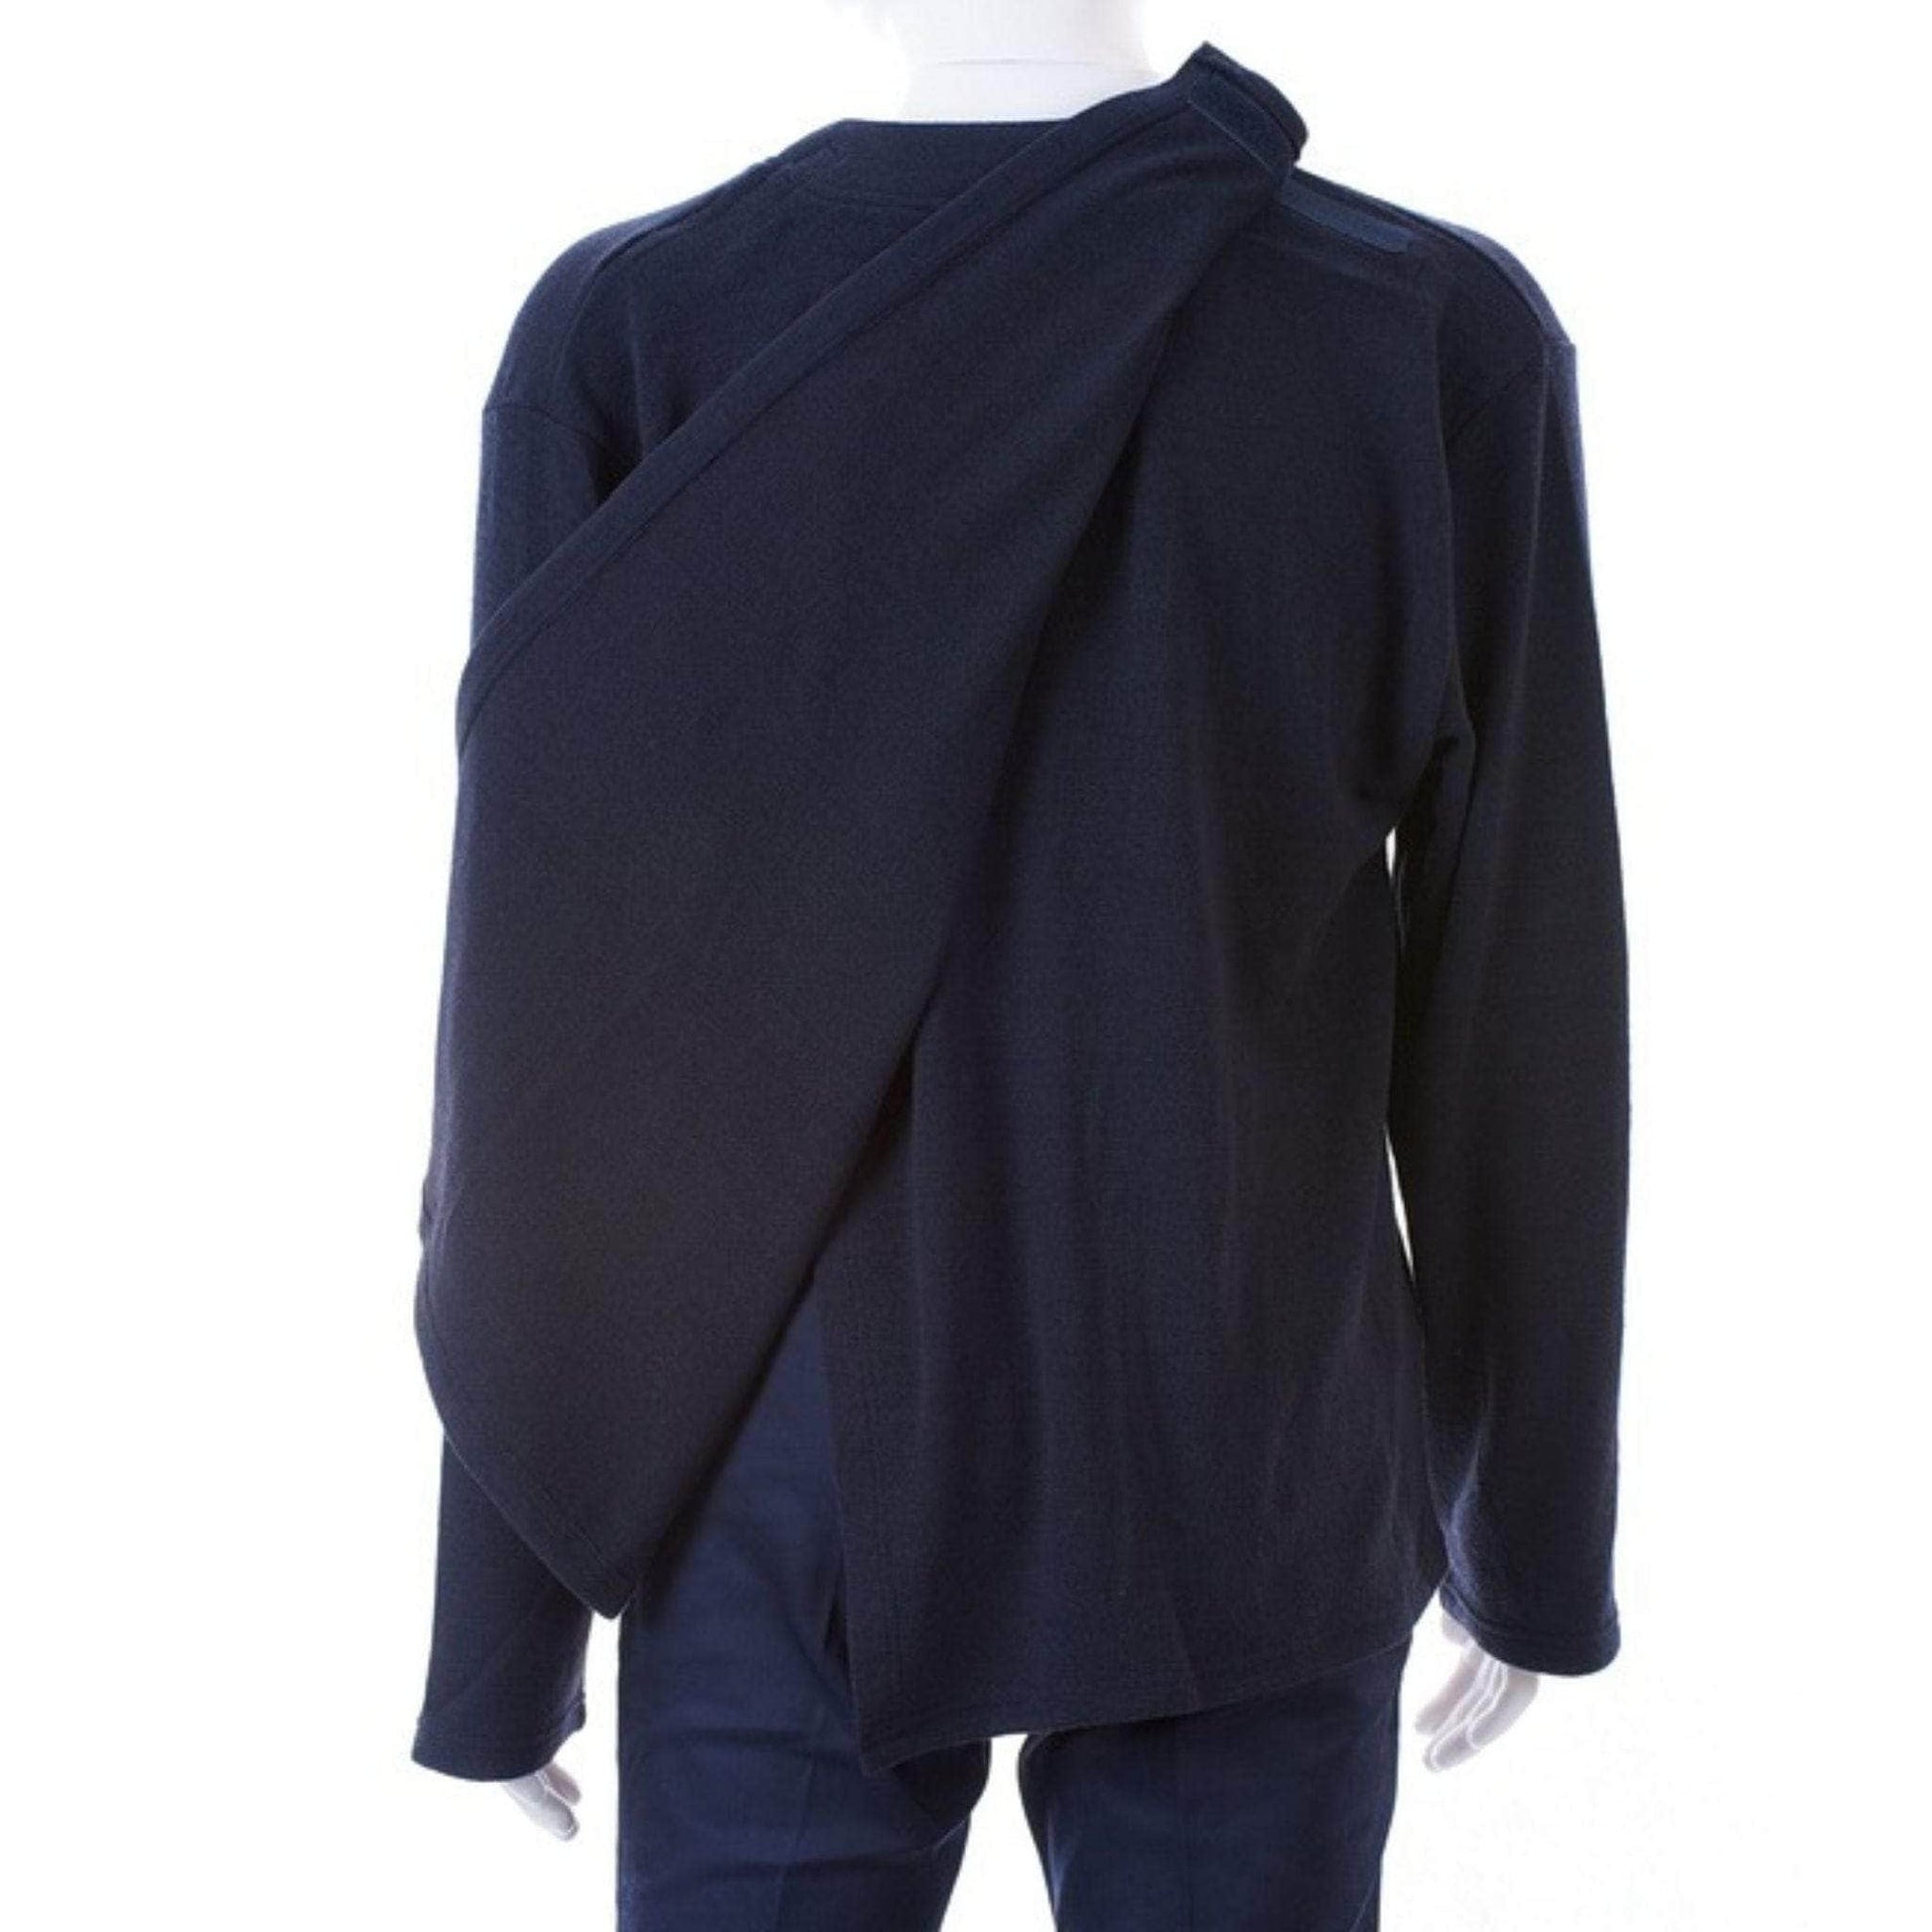 Men's Open Back Cardigan - Navy Blue - Sale - Caring Clothing